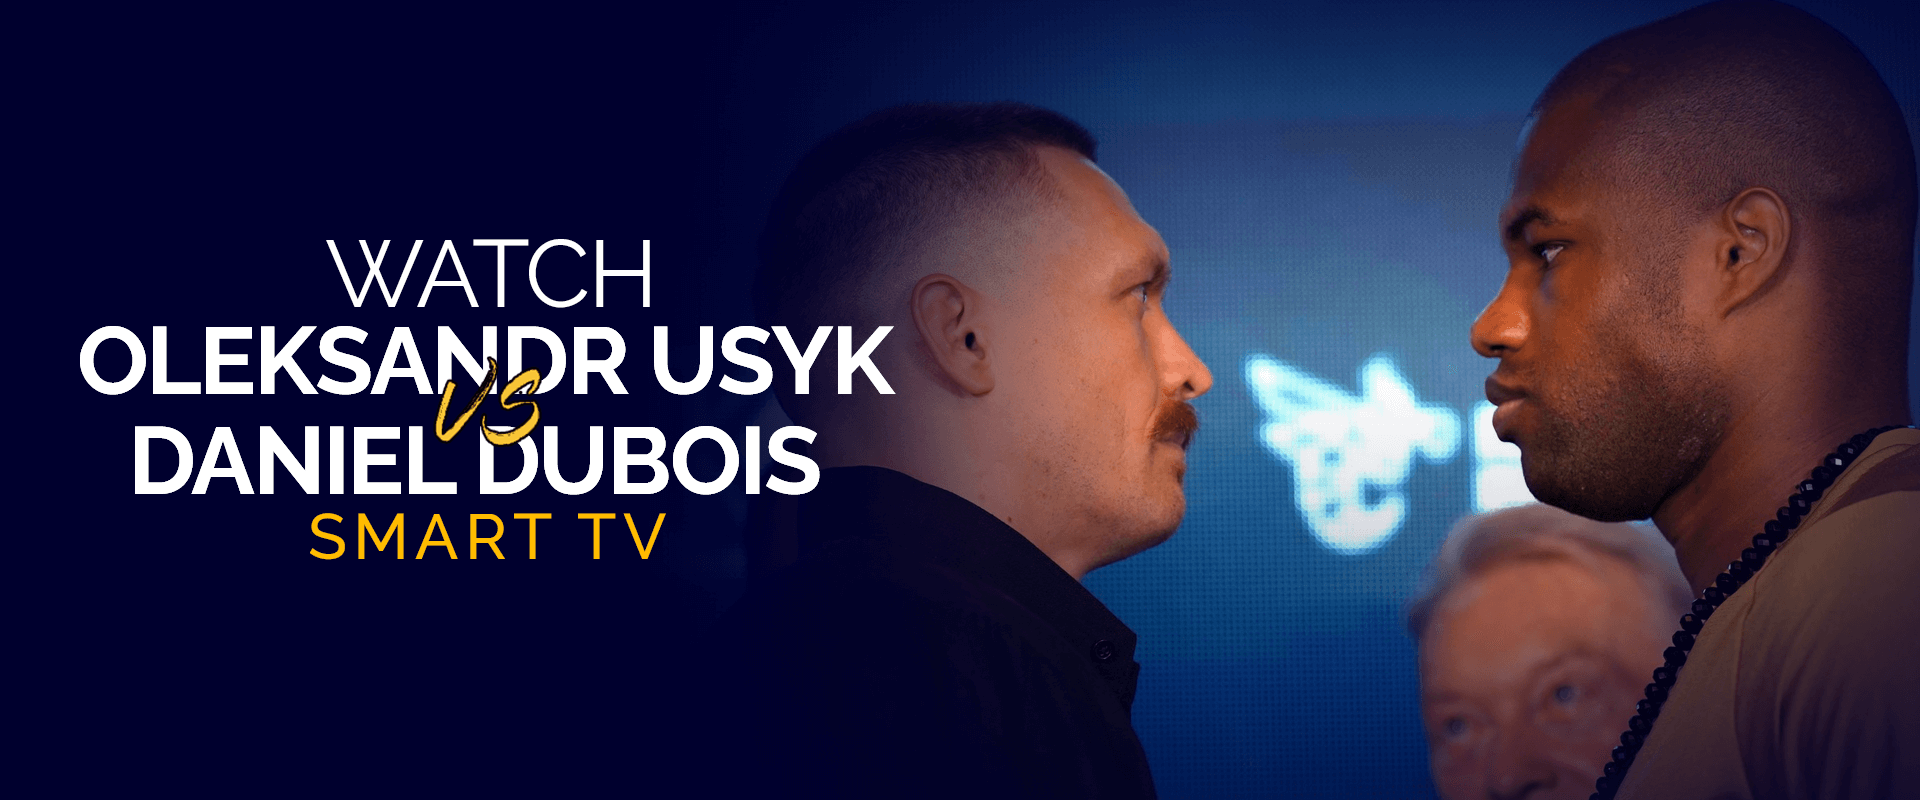 Watch Oleksandr Usyk vs. Daniel Dubois Smart TV